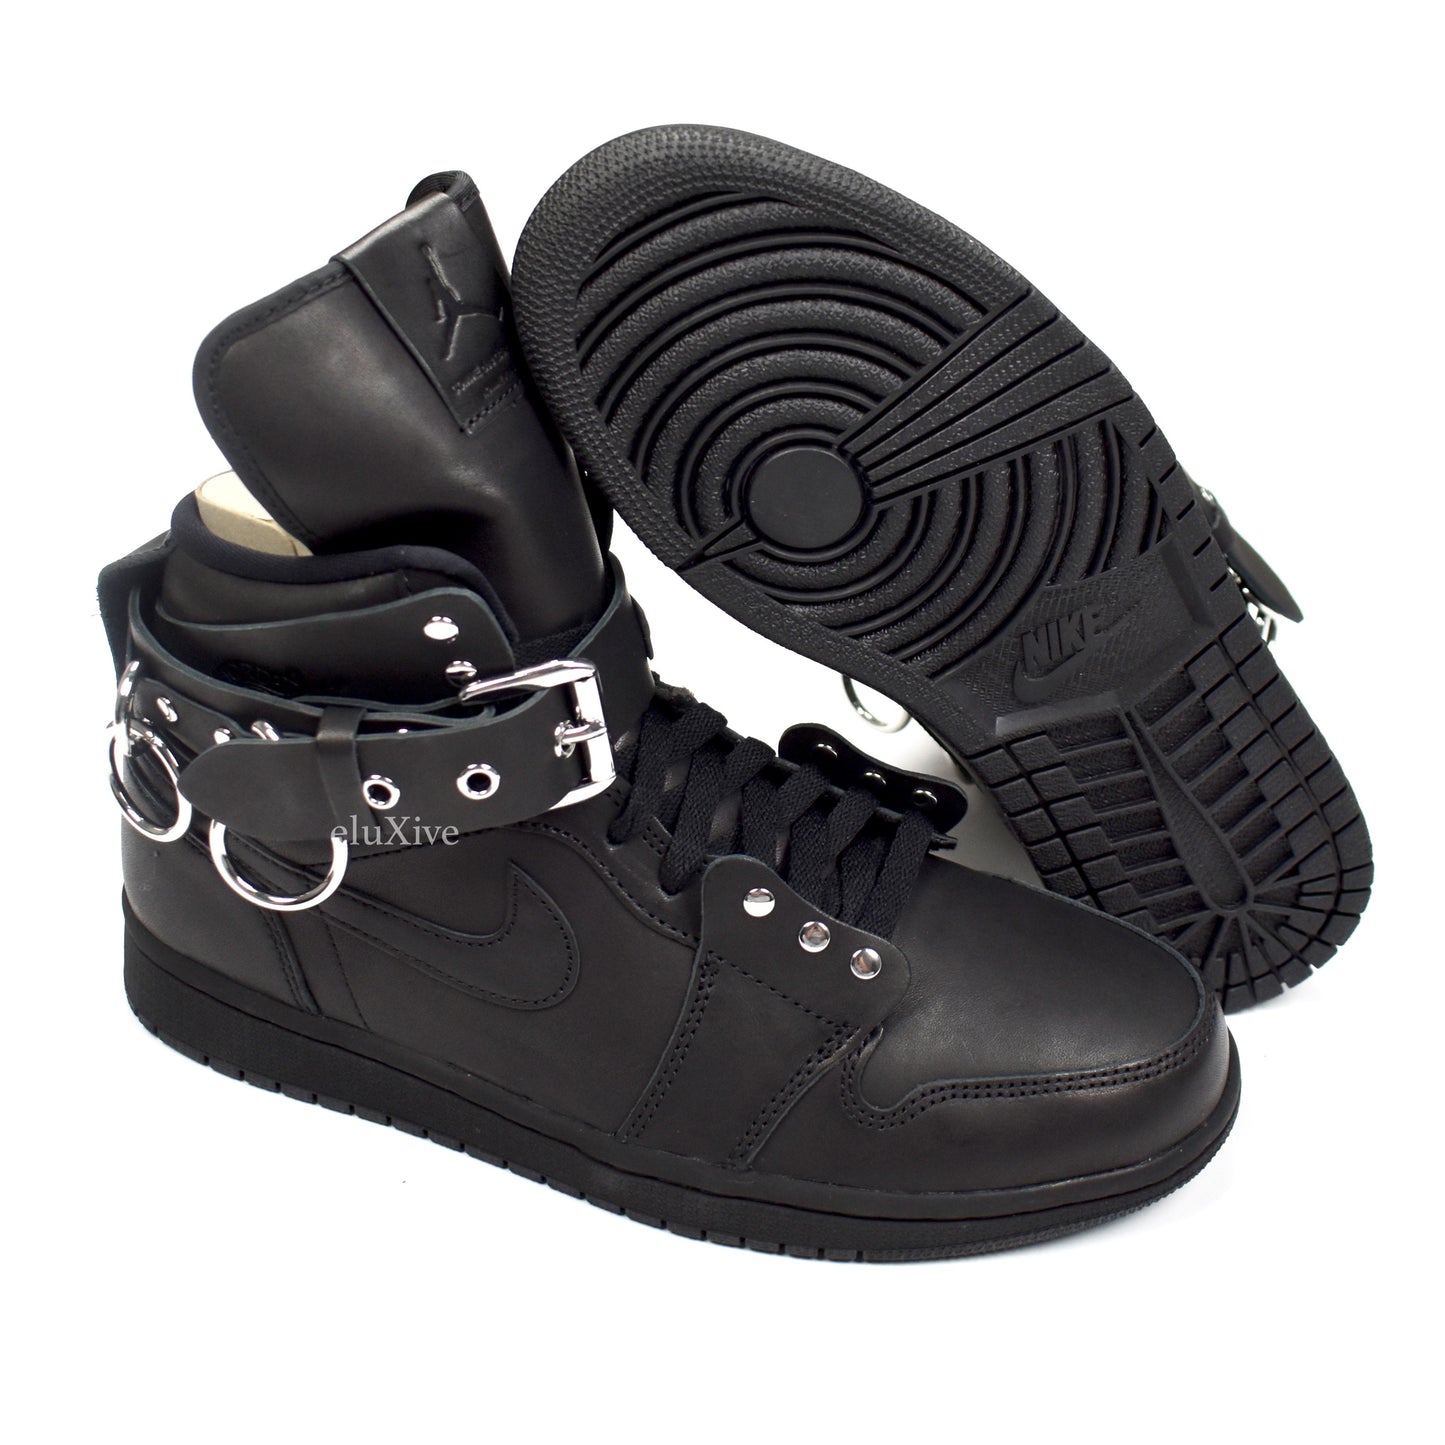 Comme des Garcons x Nike - Air Jordan 1 Hi Strap SP-C CDG (Black)